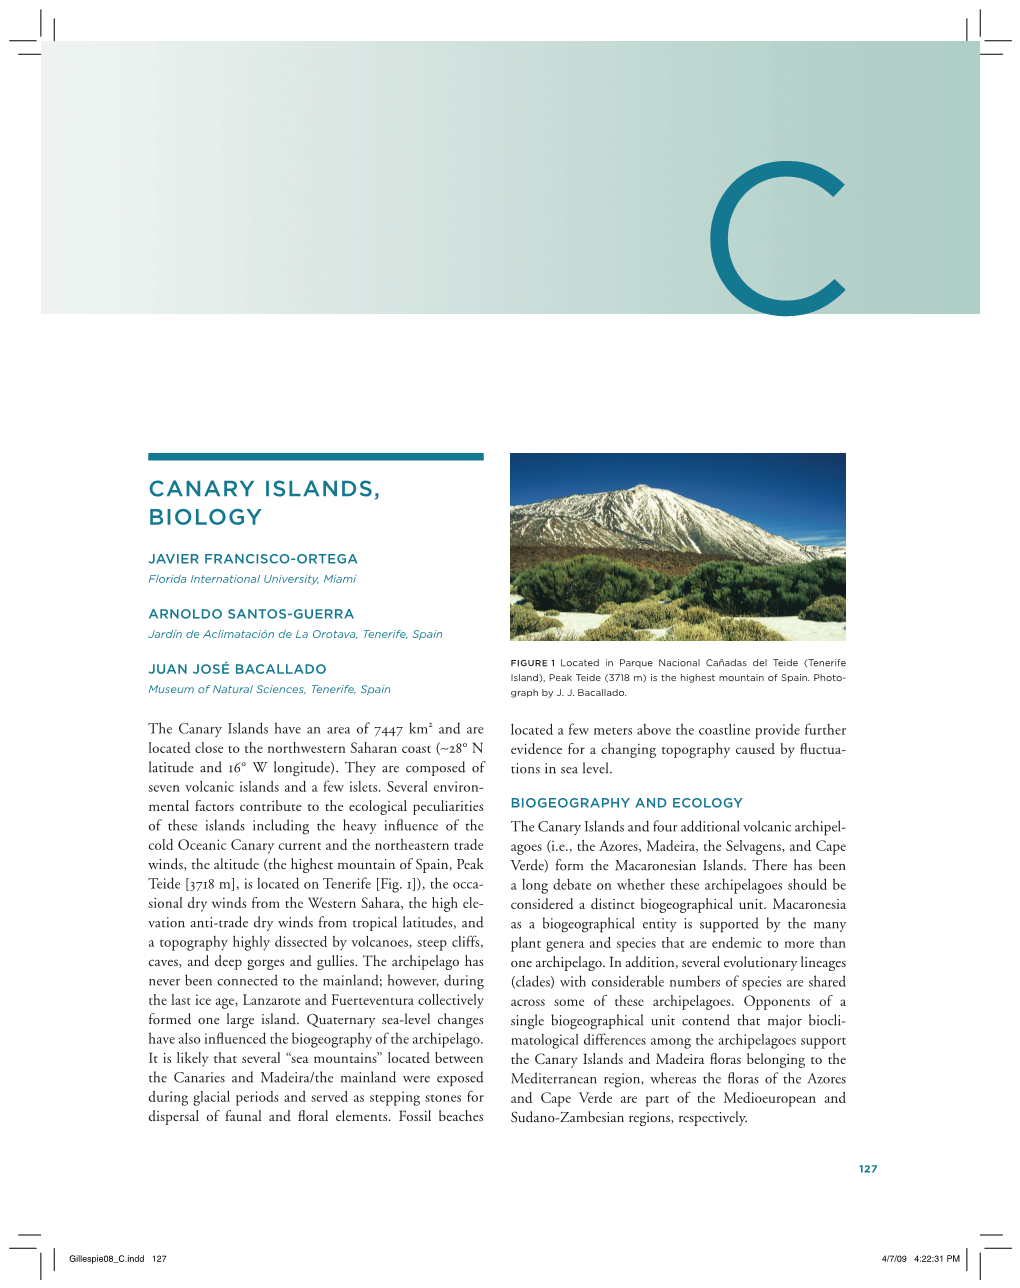 Canary Islands, Biology